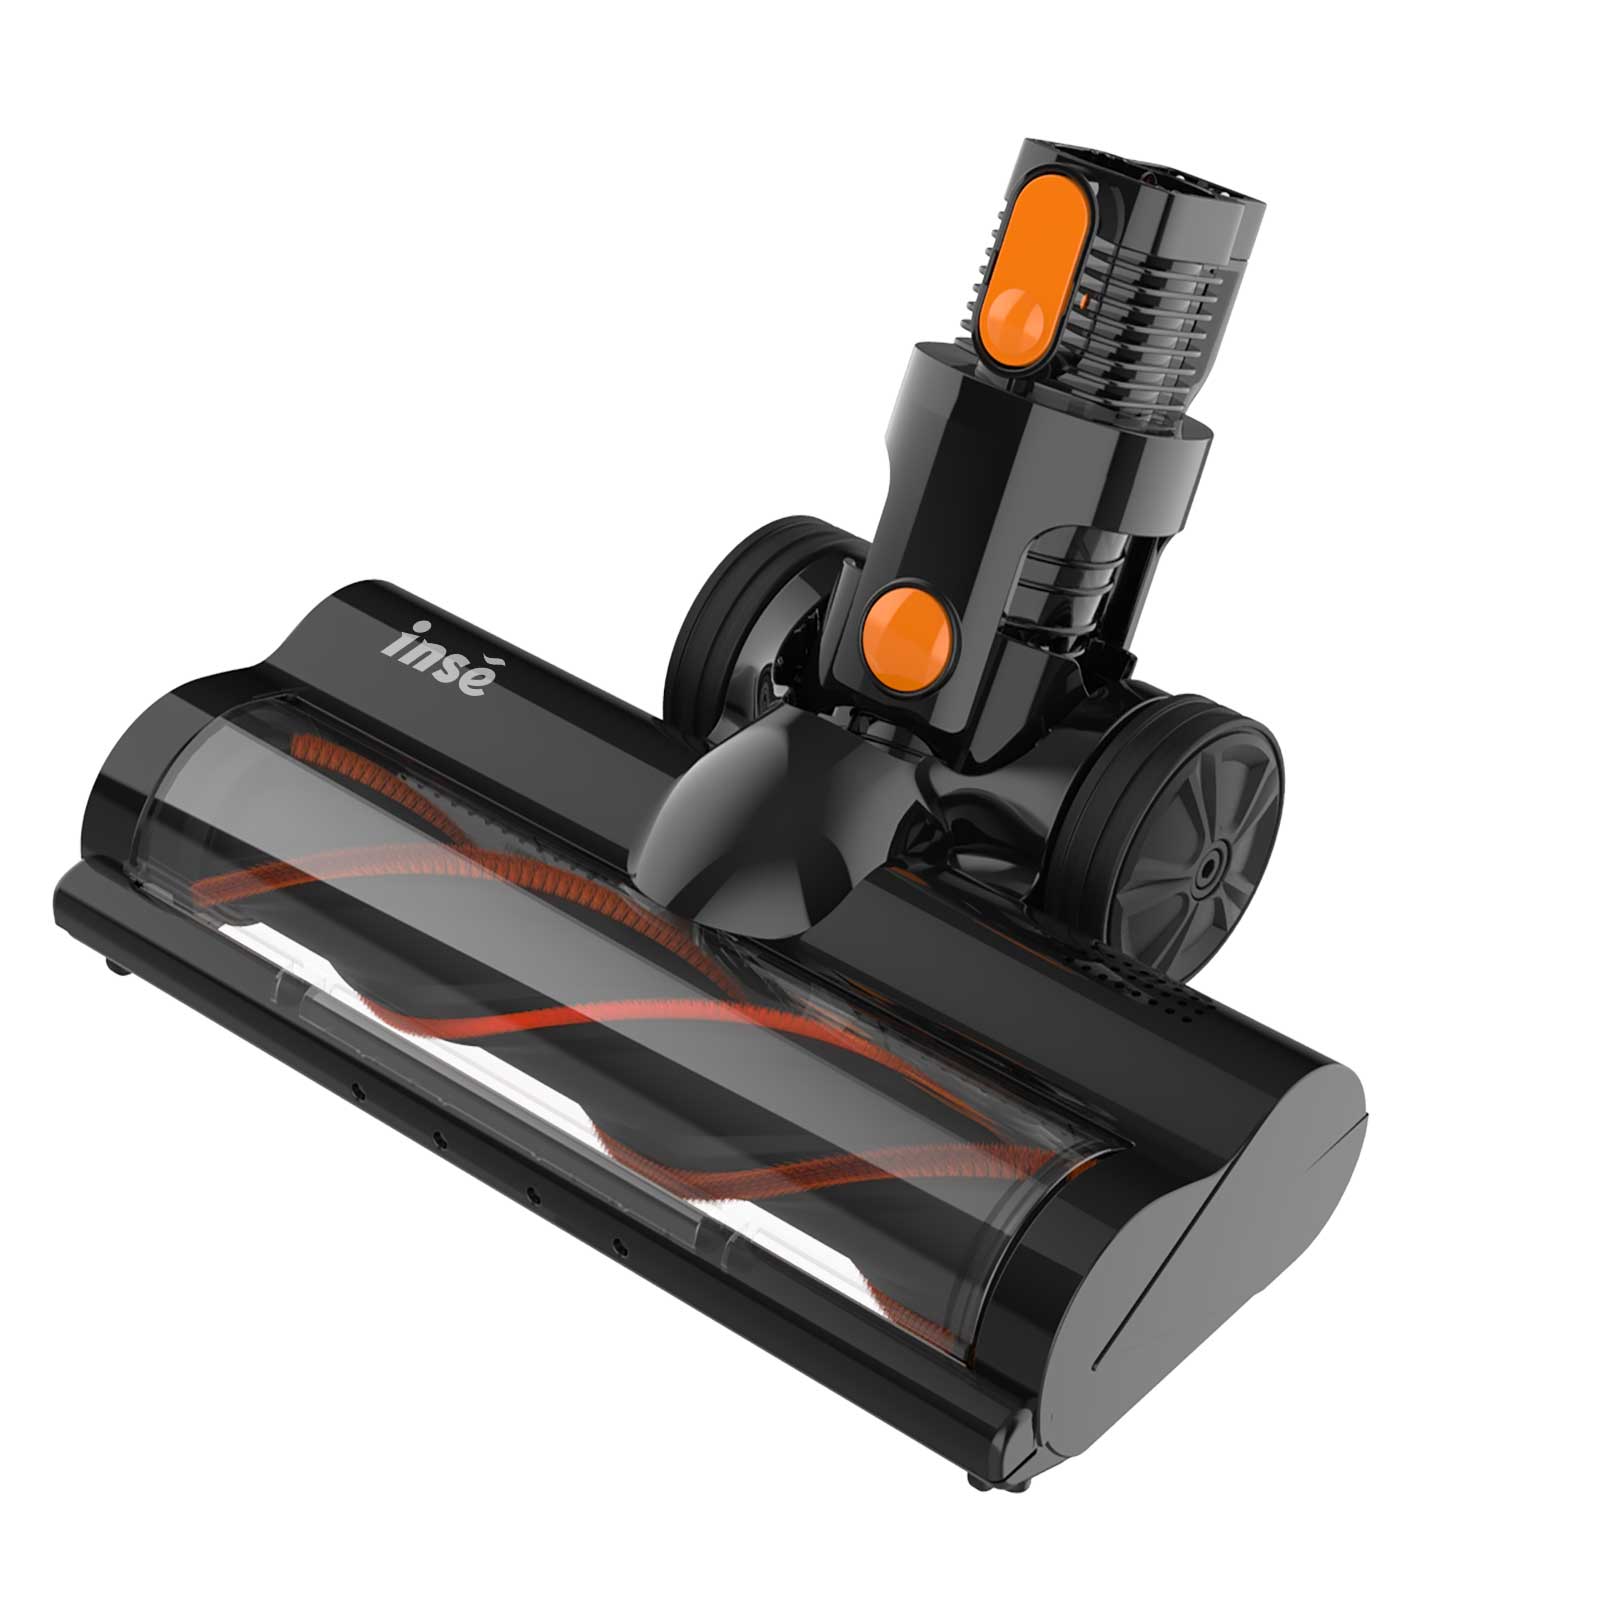  BLACK+DECKER S600 Cordless Powered Scrubber - Household  Handheld Vacuums